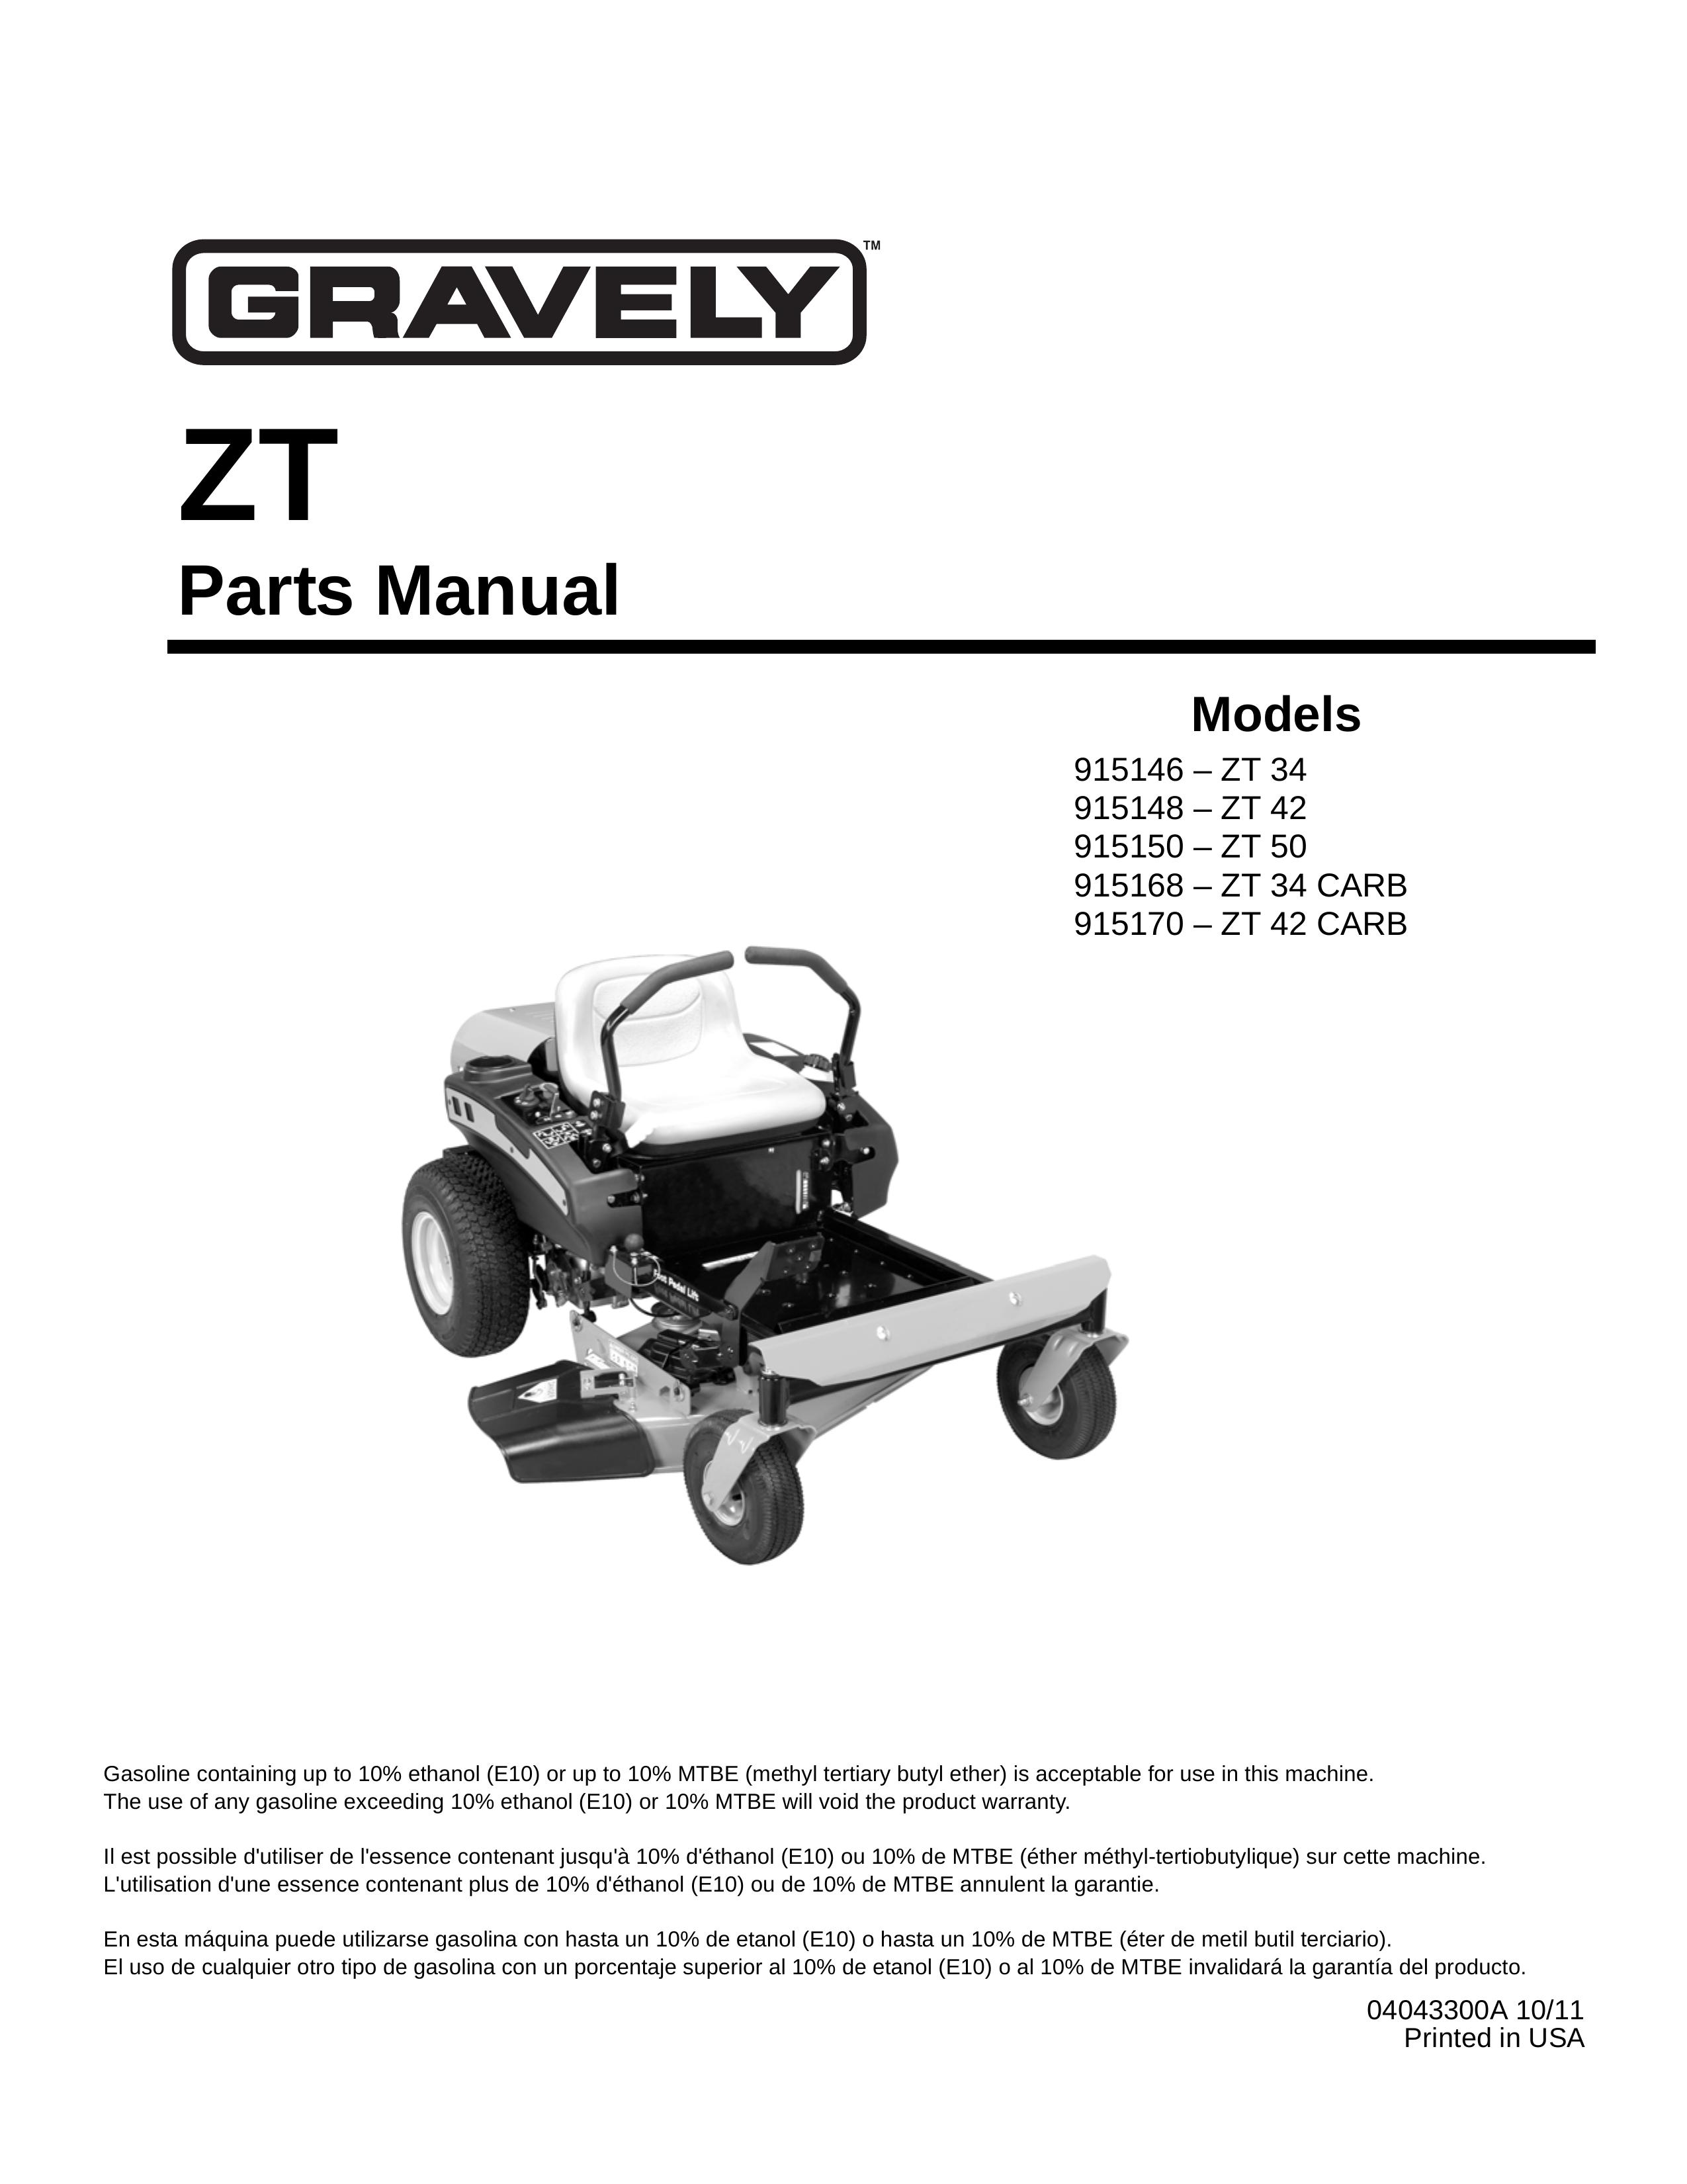 Gravely 915148 ZT 42 Lawn Mower User Manual